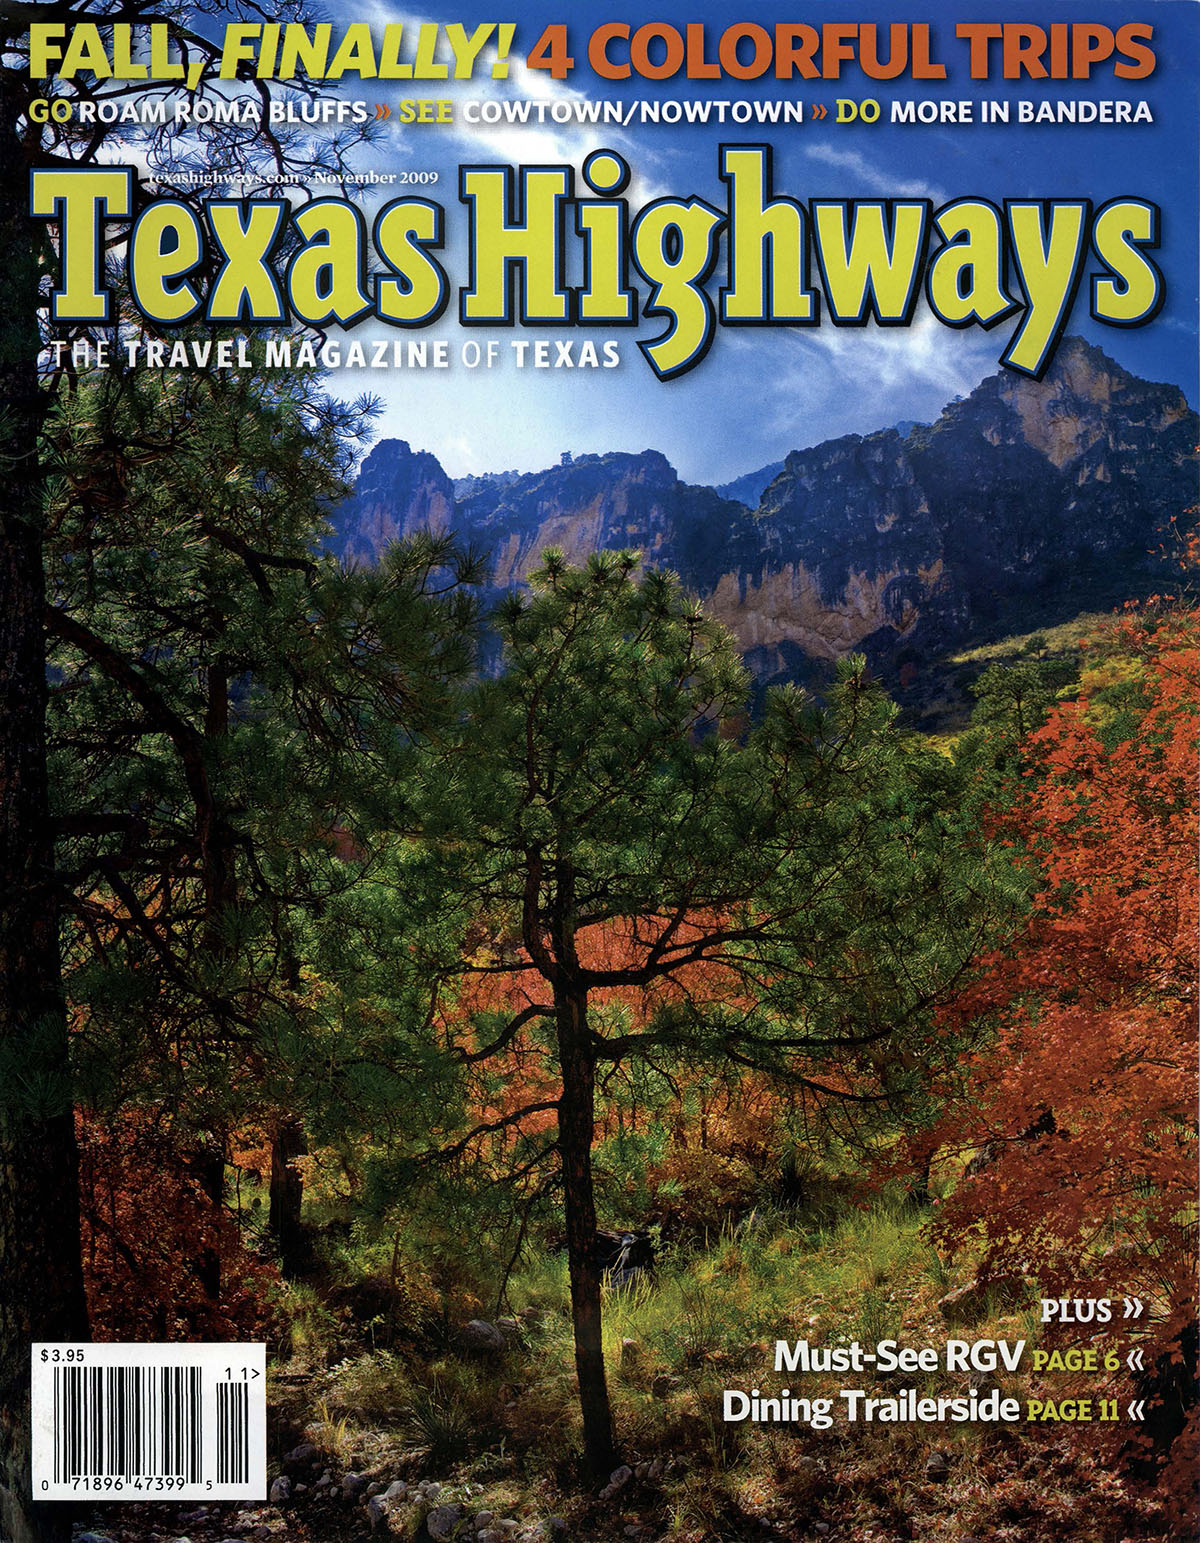 The November 2009 Cover of Texas Highways Magazine